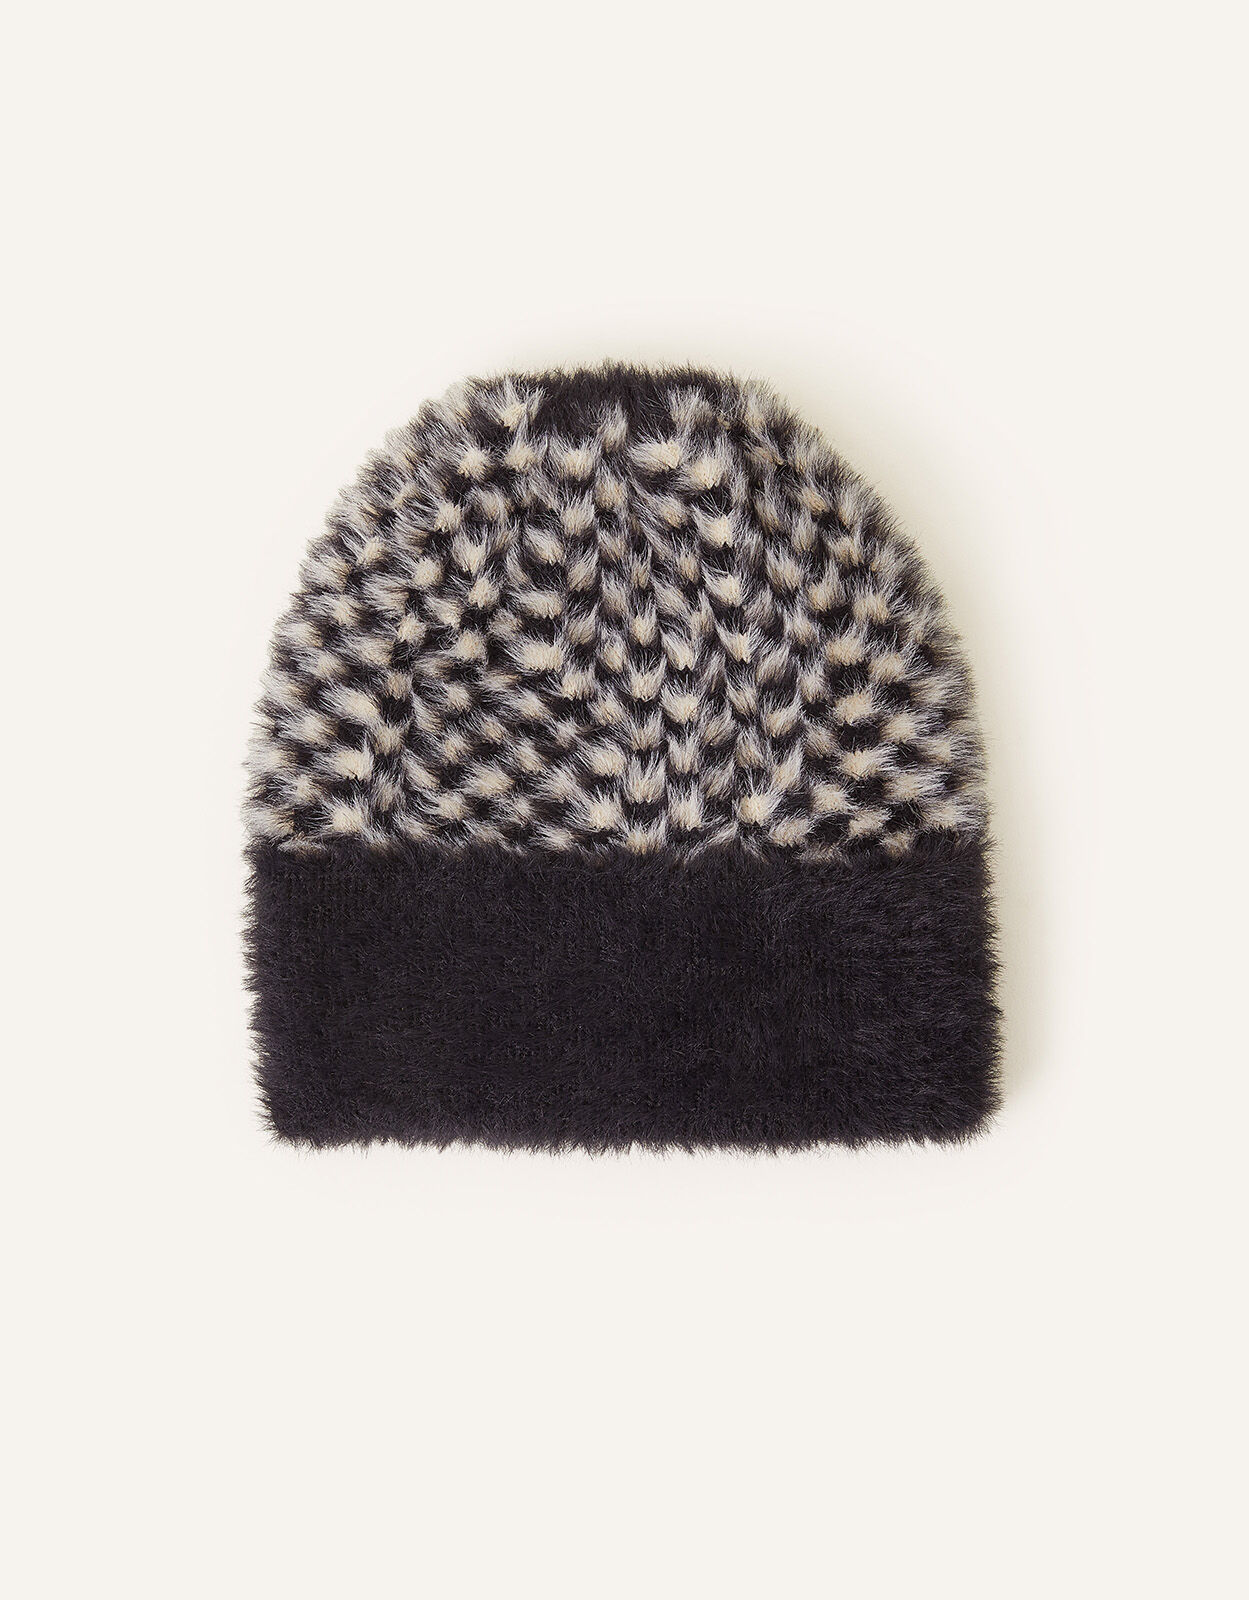 Black Women's Beanie Hats & Winter Hats | Knit, Chunky Hats